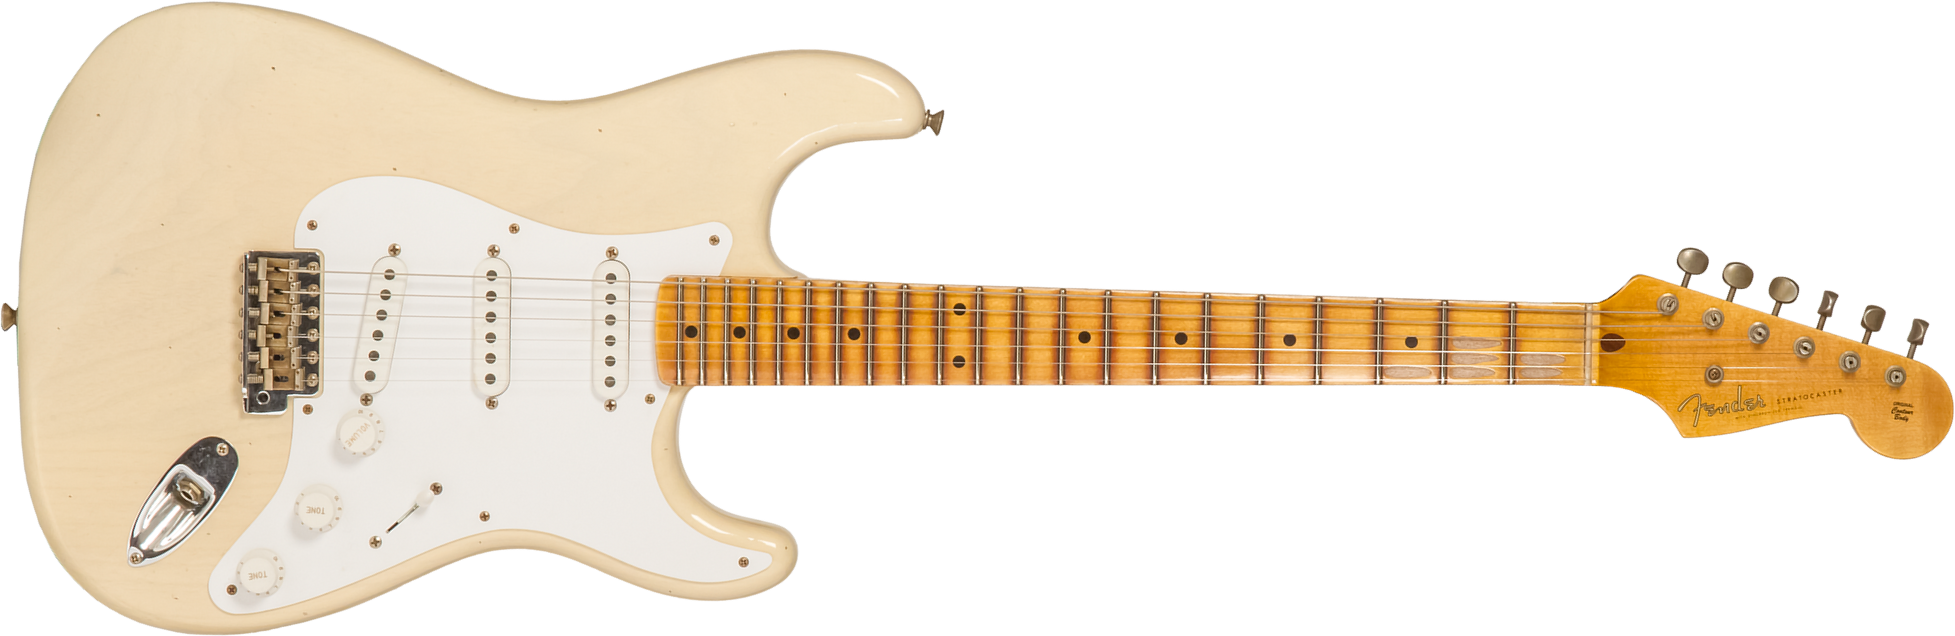 Fender Custom Shop Strat 1954 70th Anniv. 3s Trem Mn #xn4159 - Journeyman Relic Vintage Blonde - Str shape electric guitar - Main picture